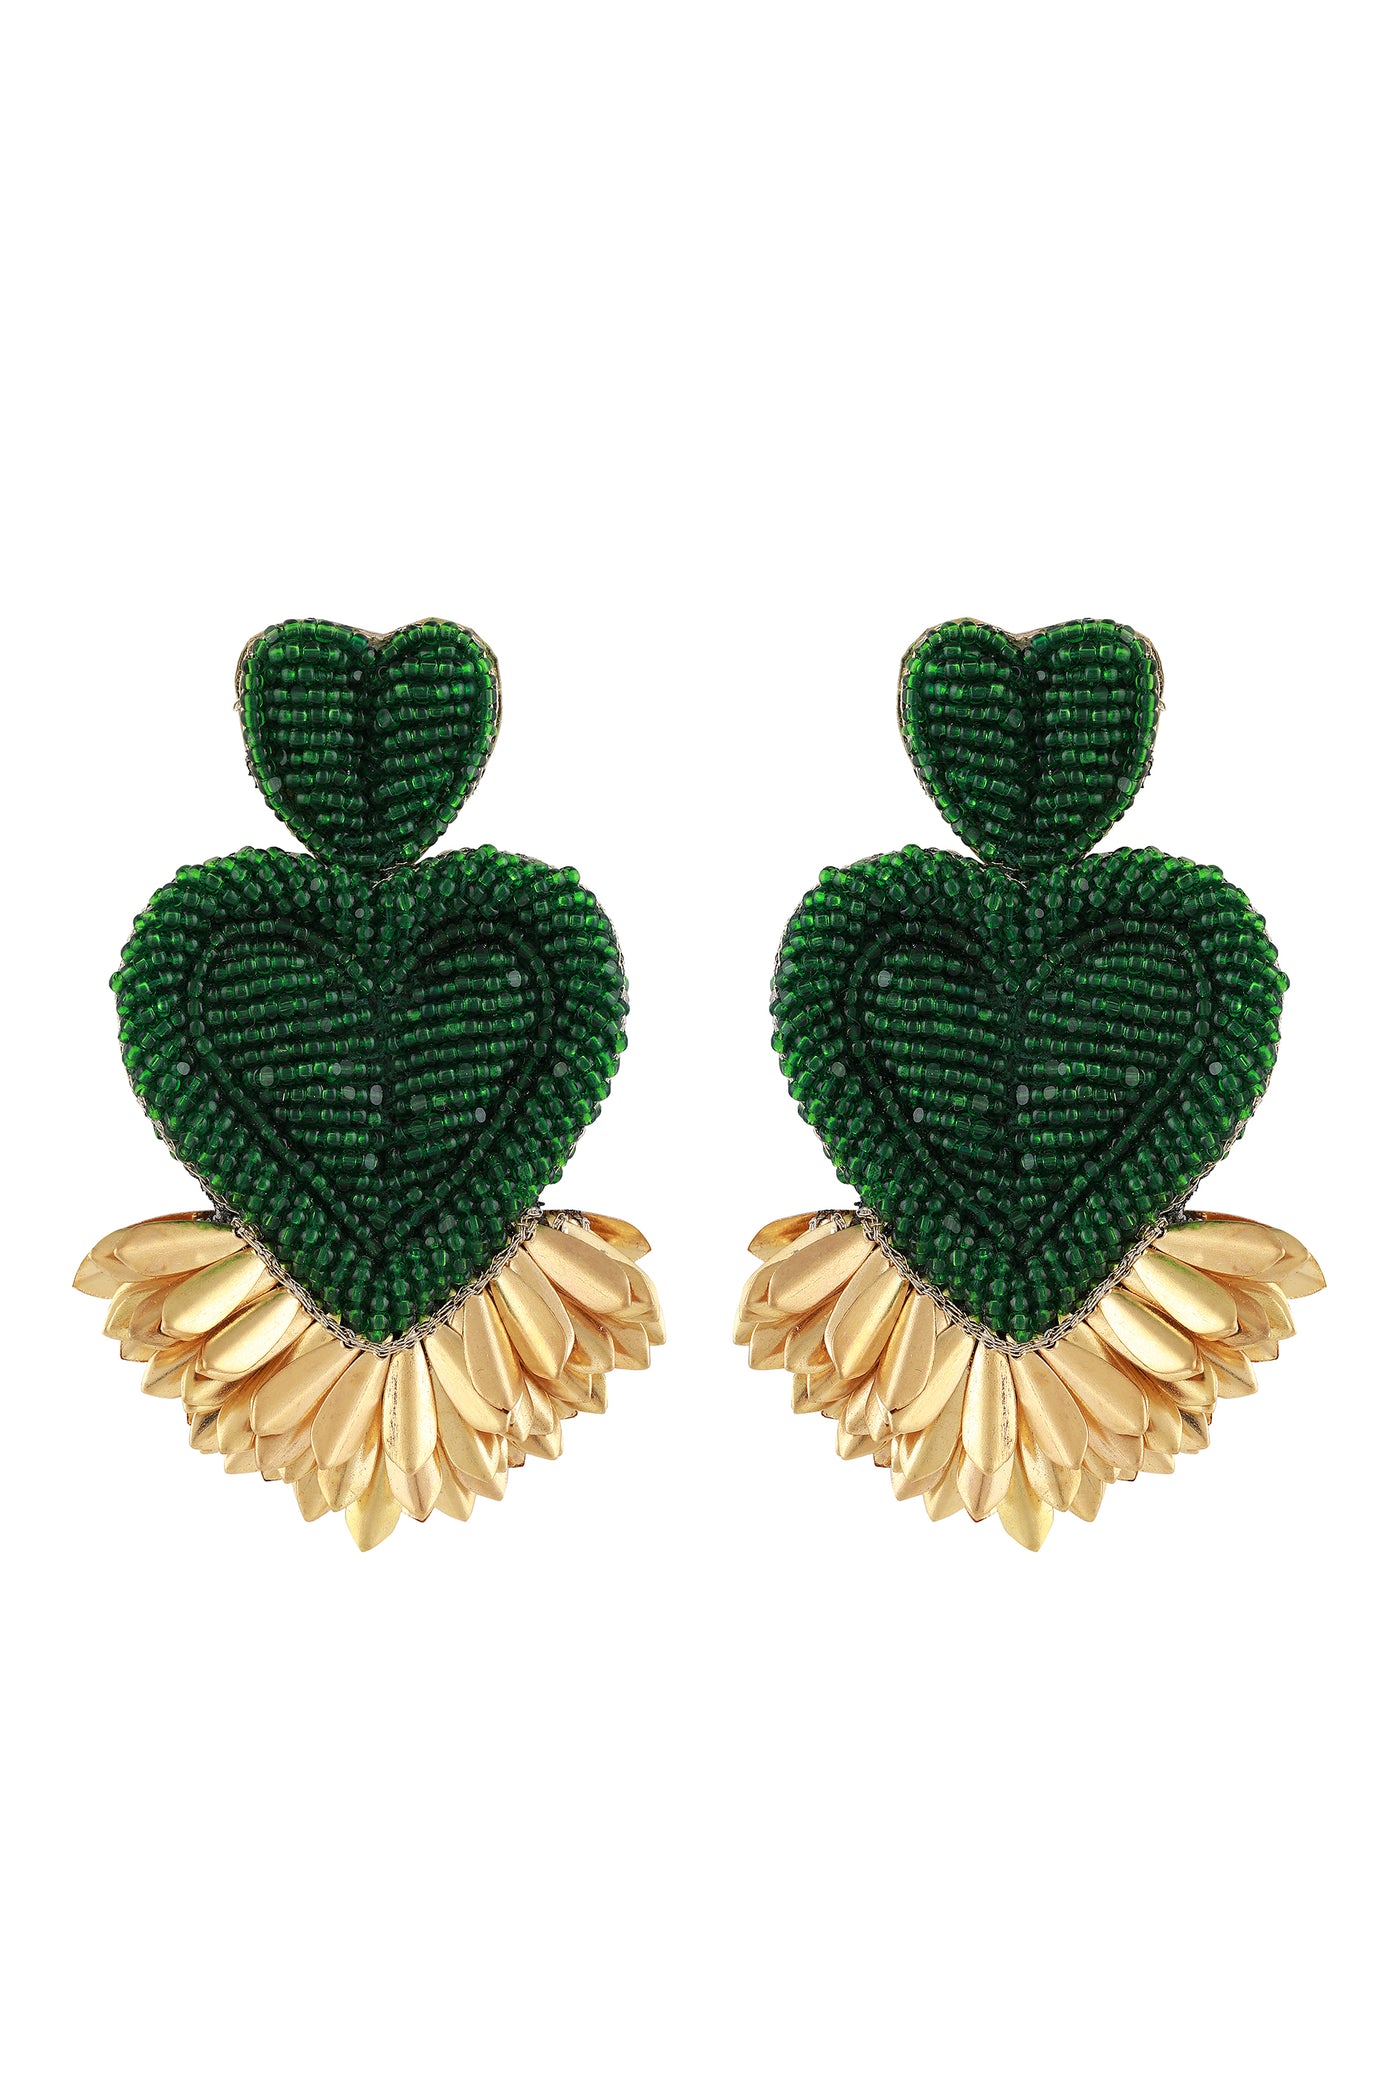 Raya jewels Beaded Heart Bringe Earrings fashion jewellery online shopping melange singapore indian designer wear